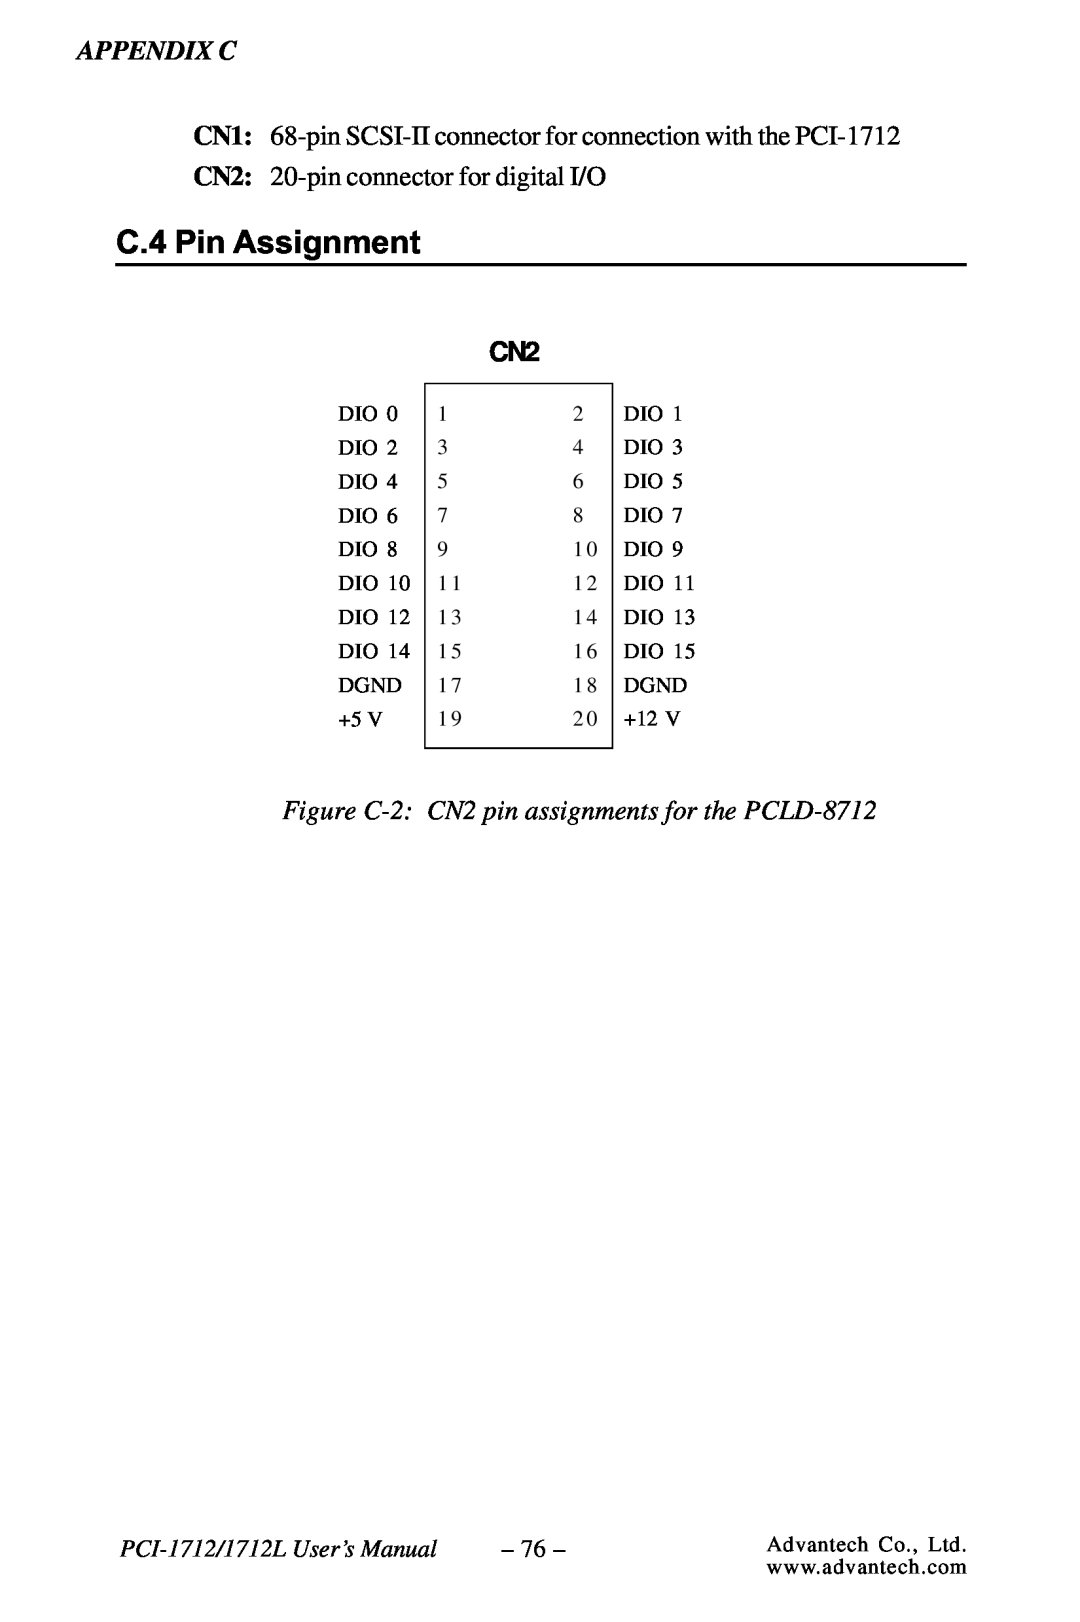 Konica Minolta PCI-1712L user manual C.4 Pin Assignment, Figure C-2 CN2 pin assignments for the PCLD-8712, Appendix C 